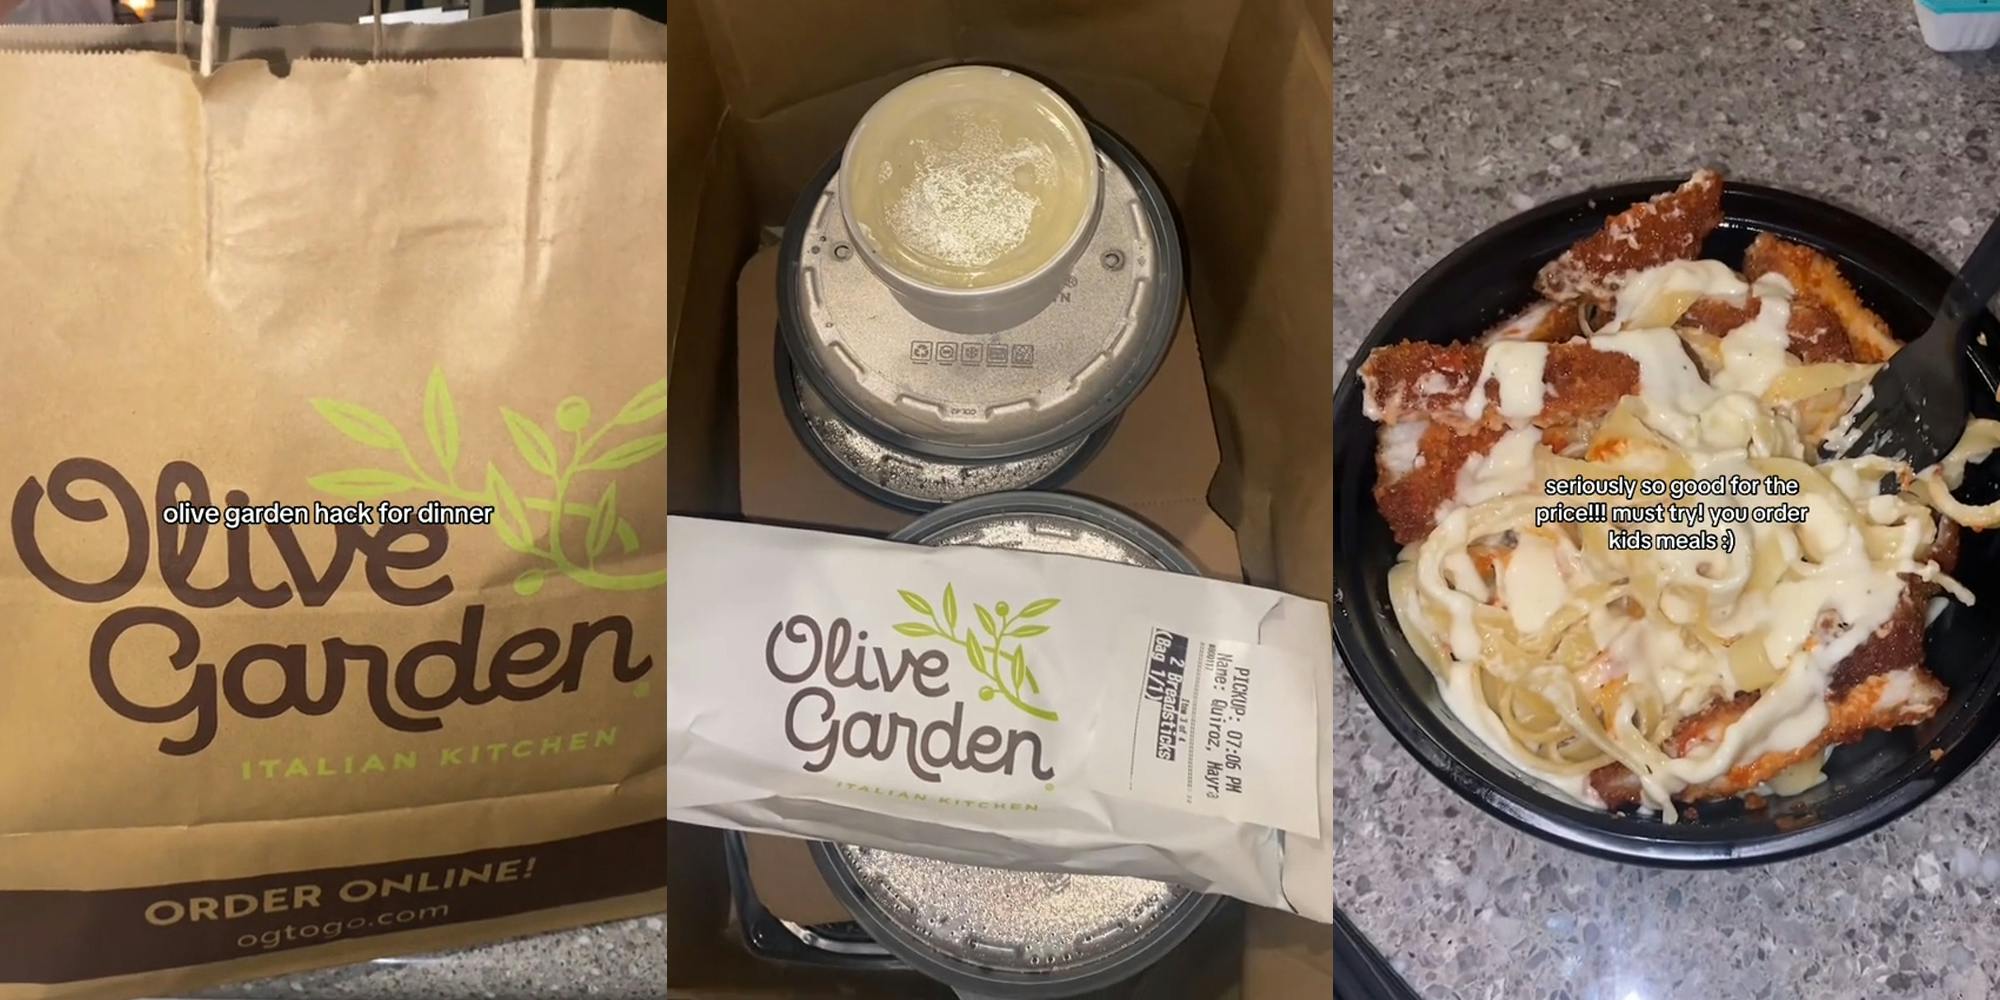 Olive Garden bag with caption "olive garden hack for dinner" (l) Olive Garden bag filled with foood (c) Olive Garden pasta and chicken with caption "seriously so good for the price!!! must try! you order kids meals :)" (r)